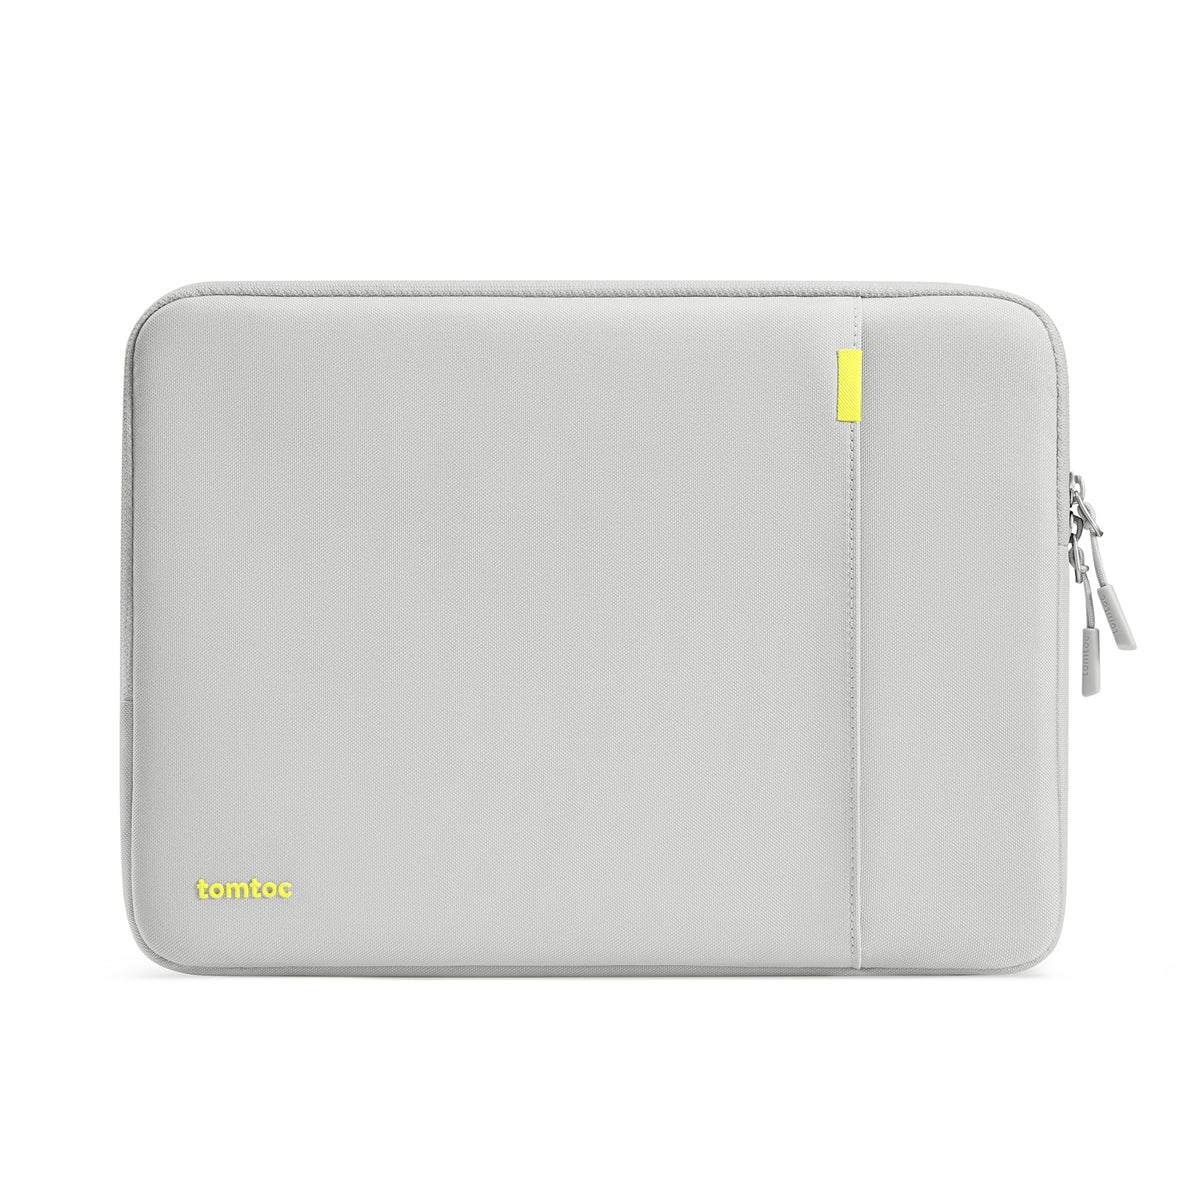 tomtoc 15 Inch Versatile 360 Protective Laptop Sleeve - Gray